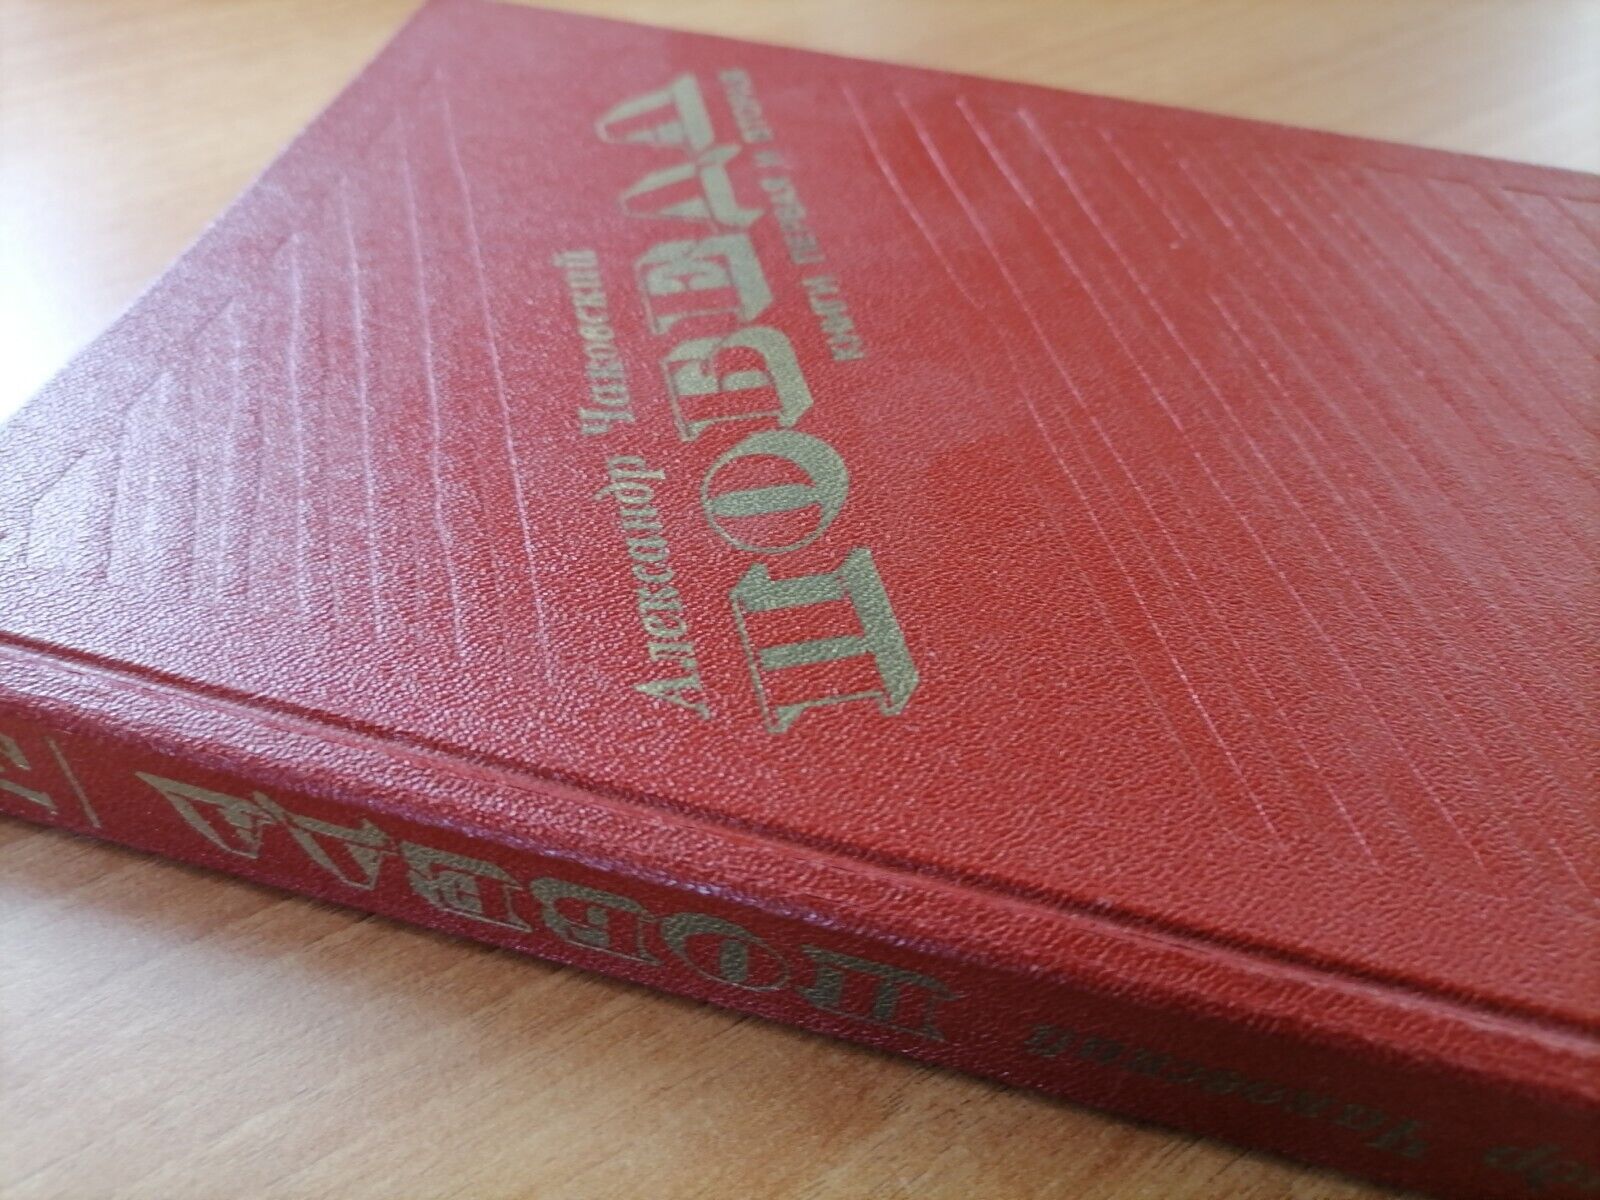 1988 VICTORY Novel in 2 Vols by A.Chakovsky ~ ПОБЕДА. А.Чаковский ~ Soviet Book Без бренда - фотография #2